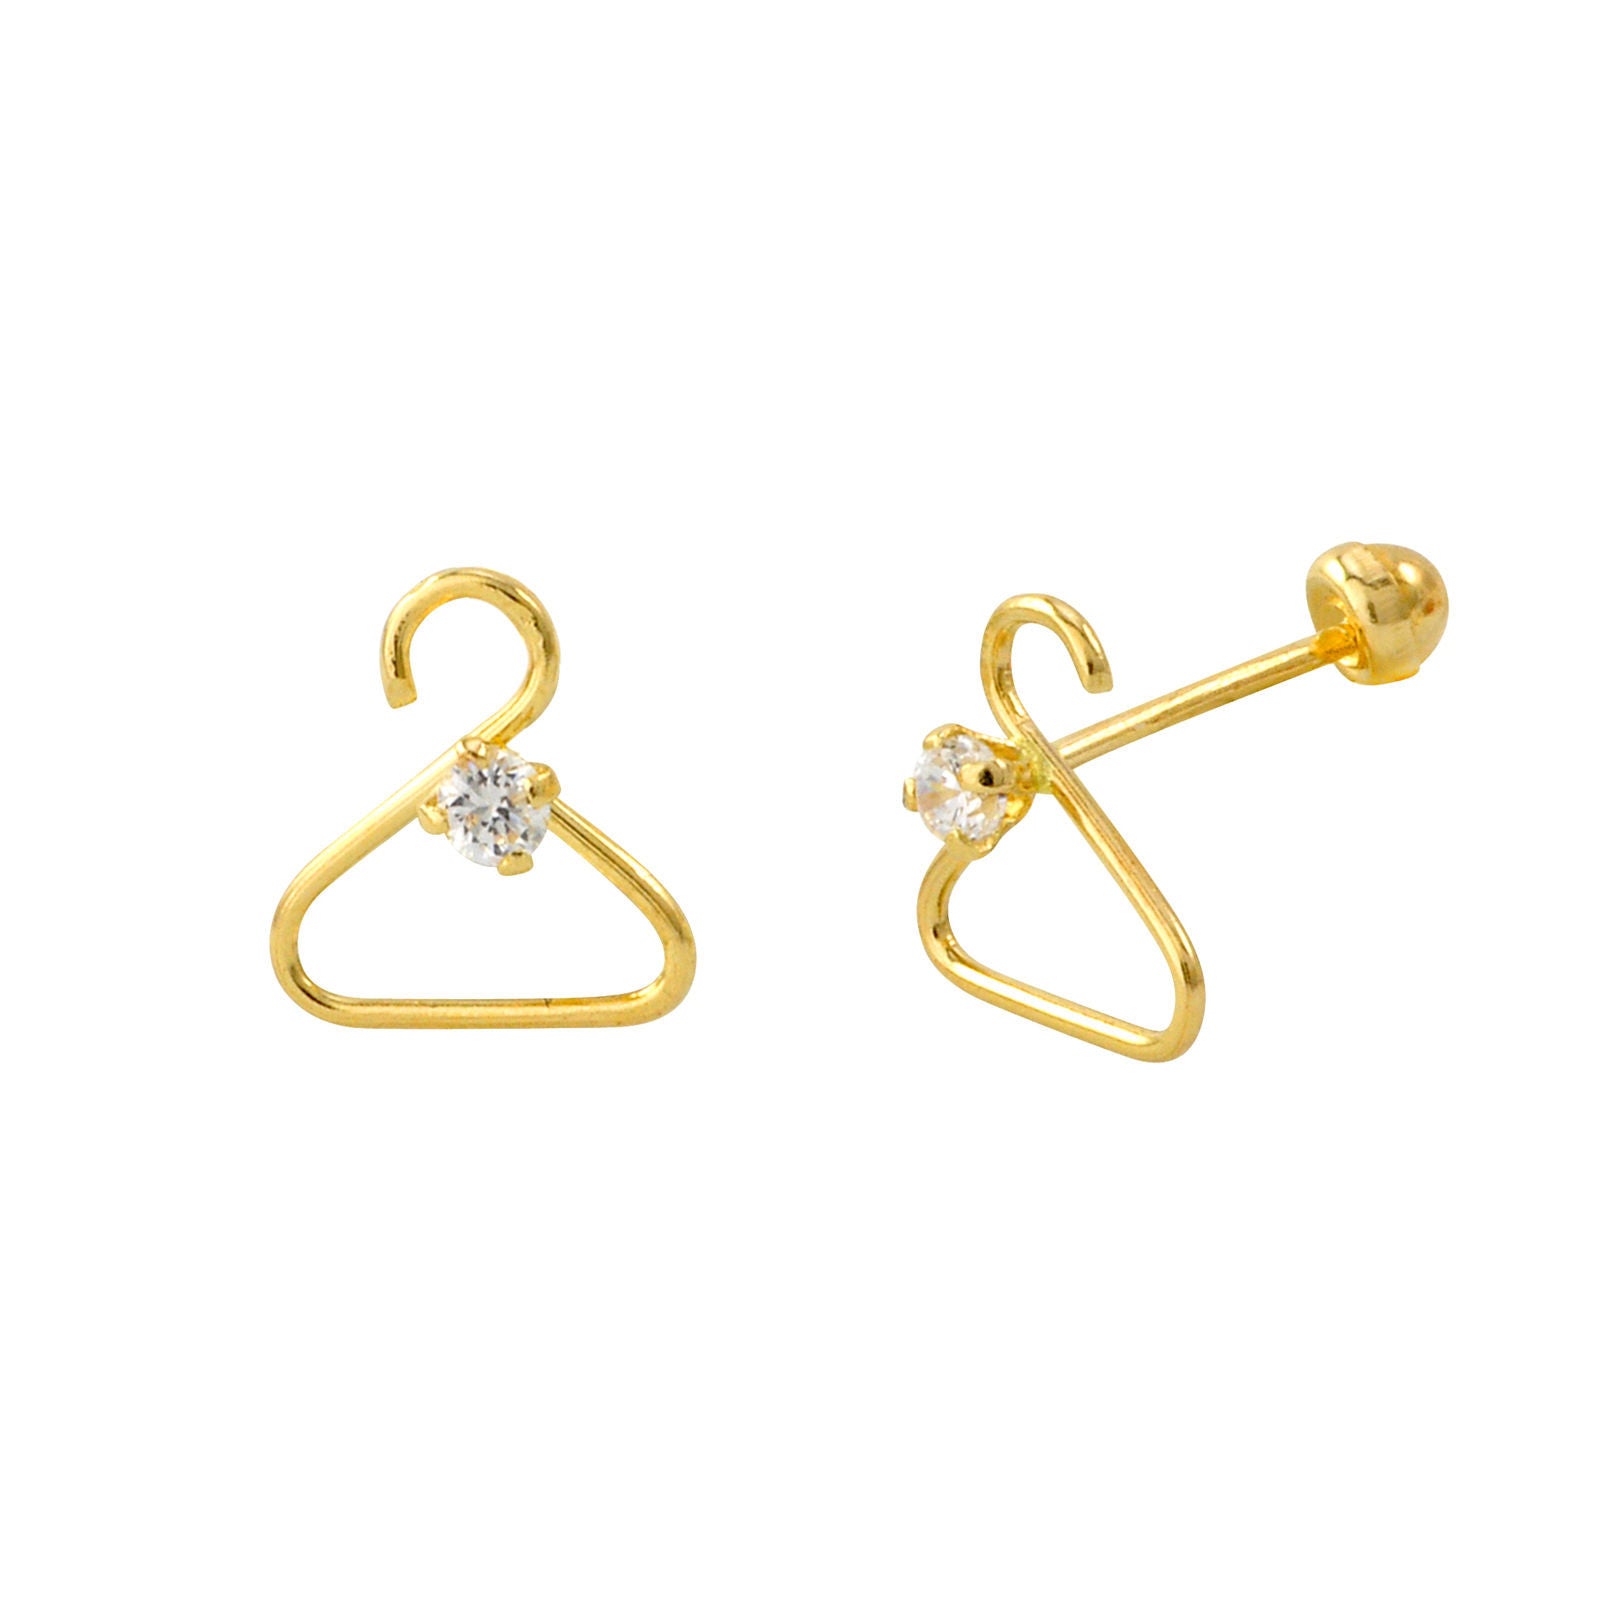 Coat Hanger Earrings 10k Yellow Gold with Screwbacks 8x8 | Jewelryland.com